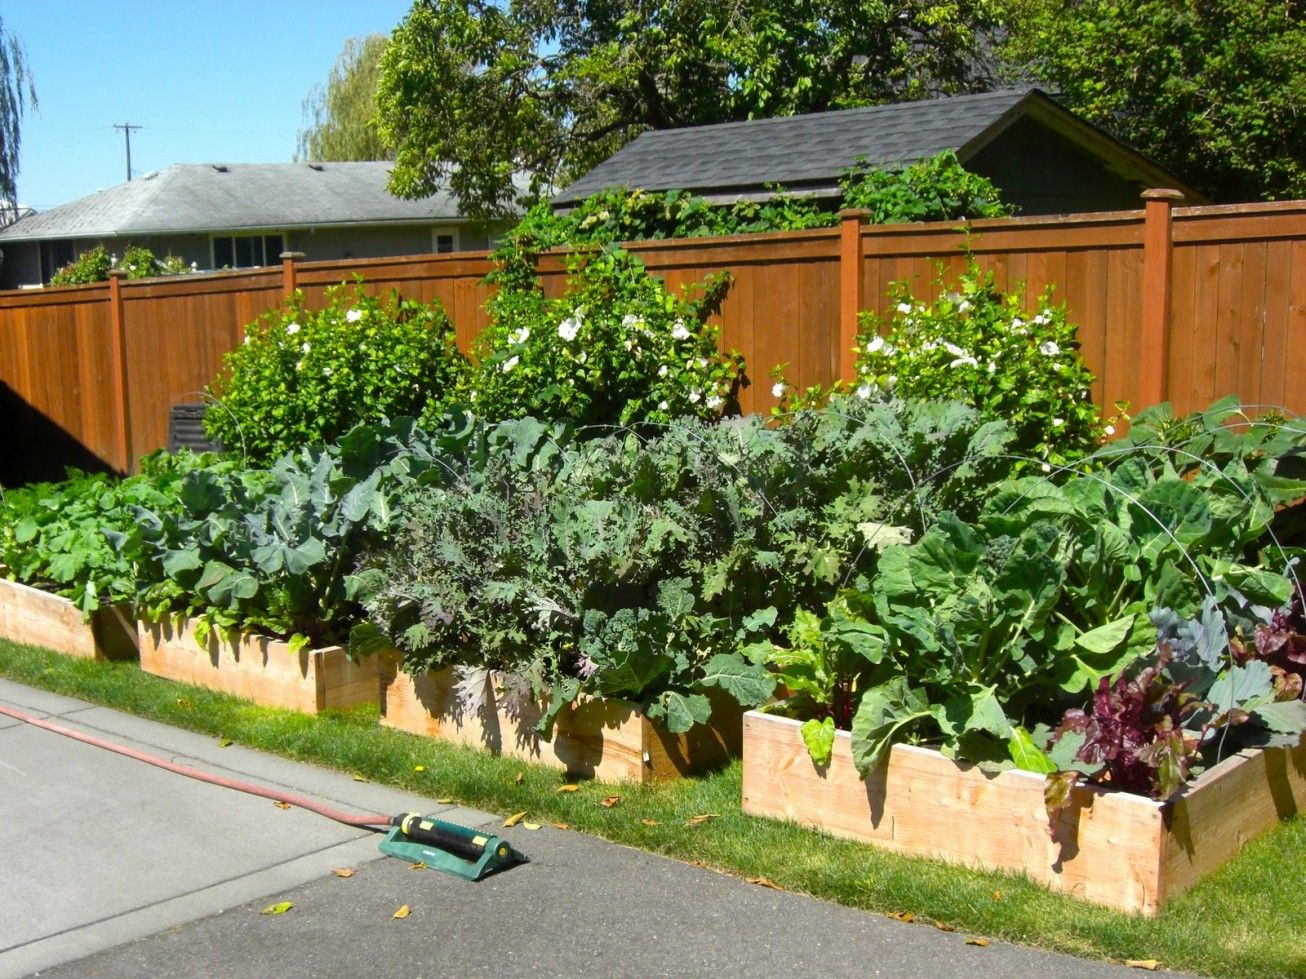 Fertilizing Vegetable Gardening In A Raised Bed